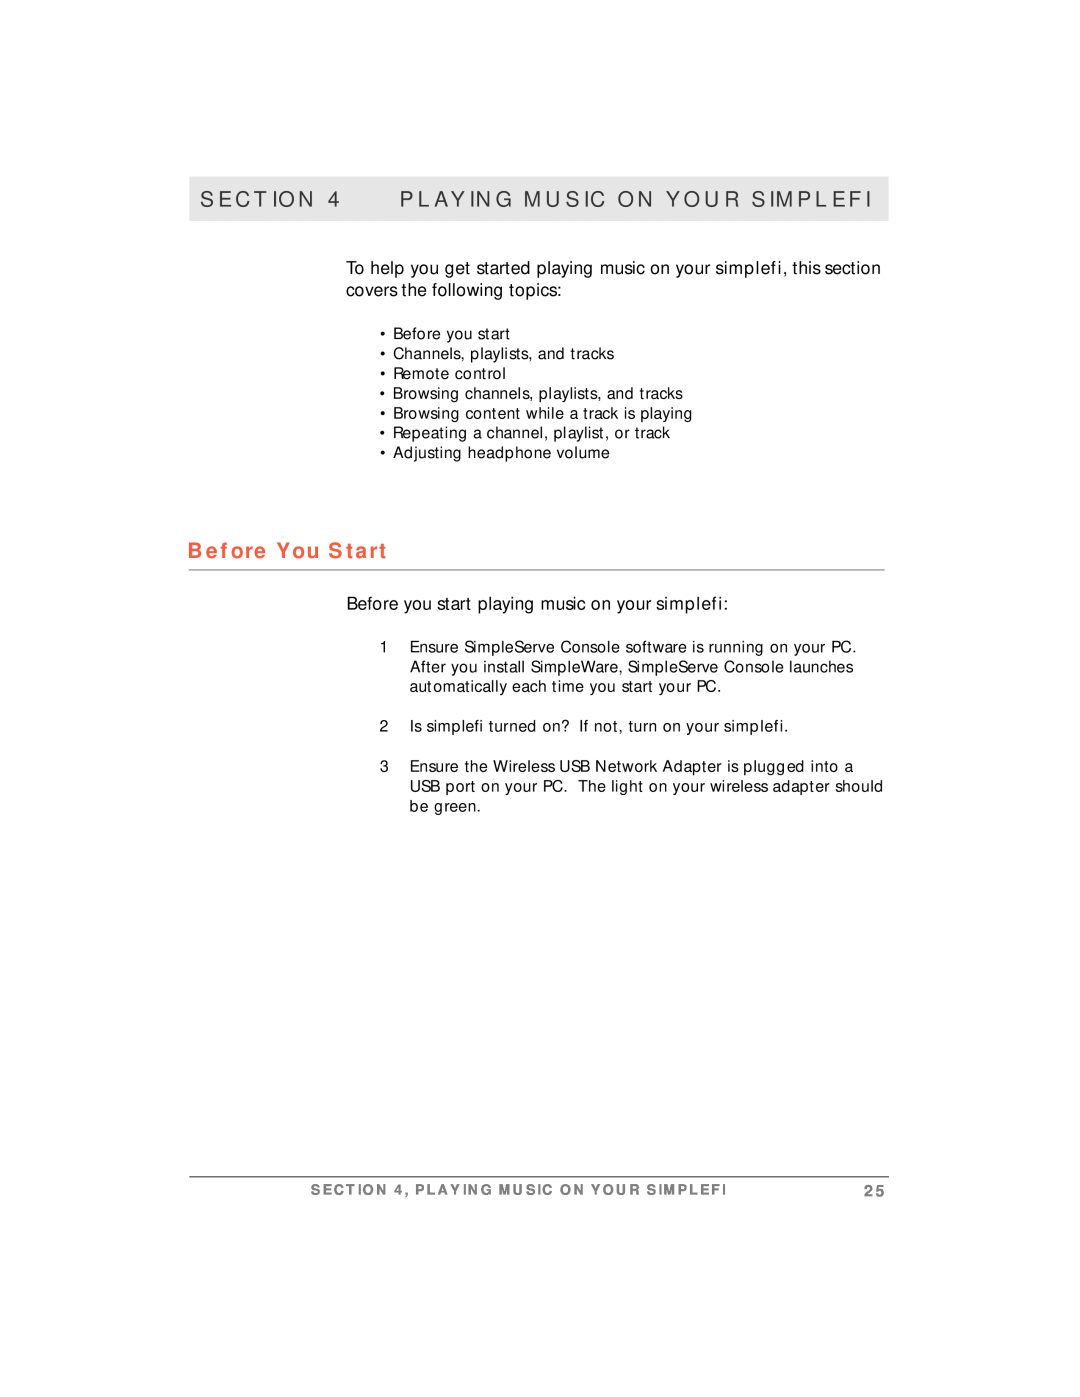 Motorola simplefi manual Playing Music On Your Simplefi, Before You Start 